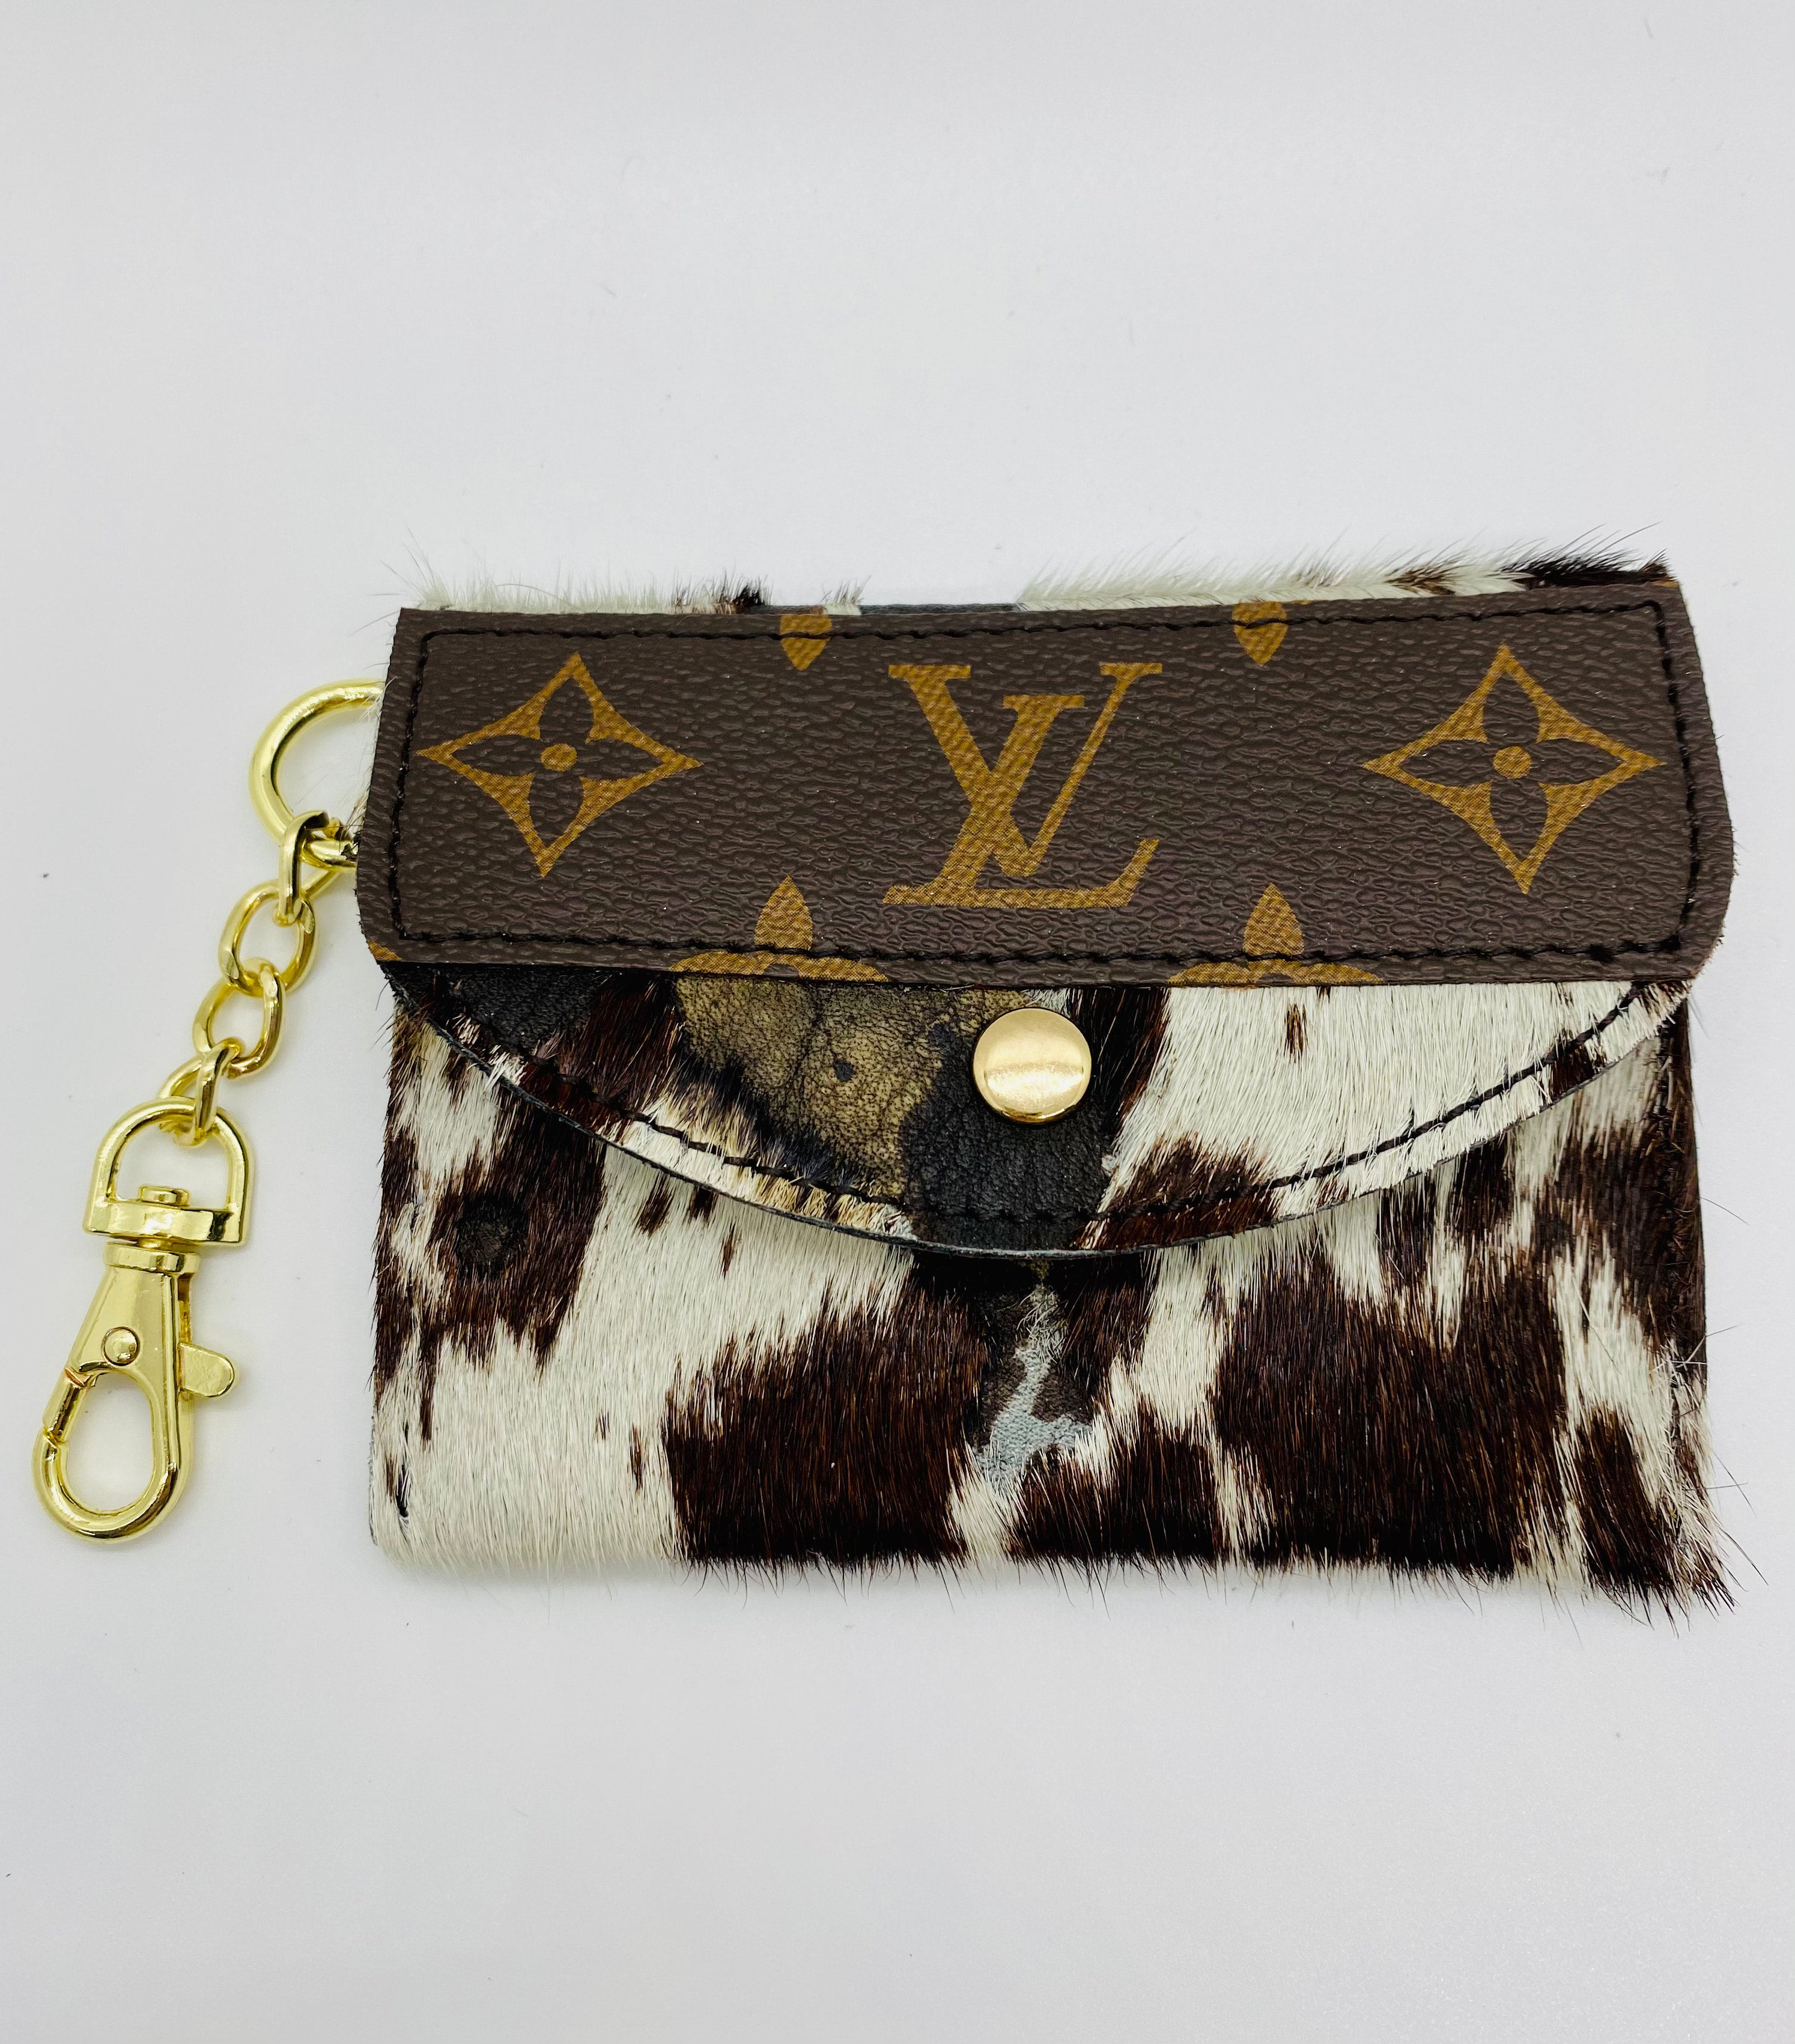 Authentic Louis Vuitton Speedy 25 Bandouliere Monogram LV Handbag | eBay